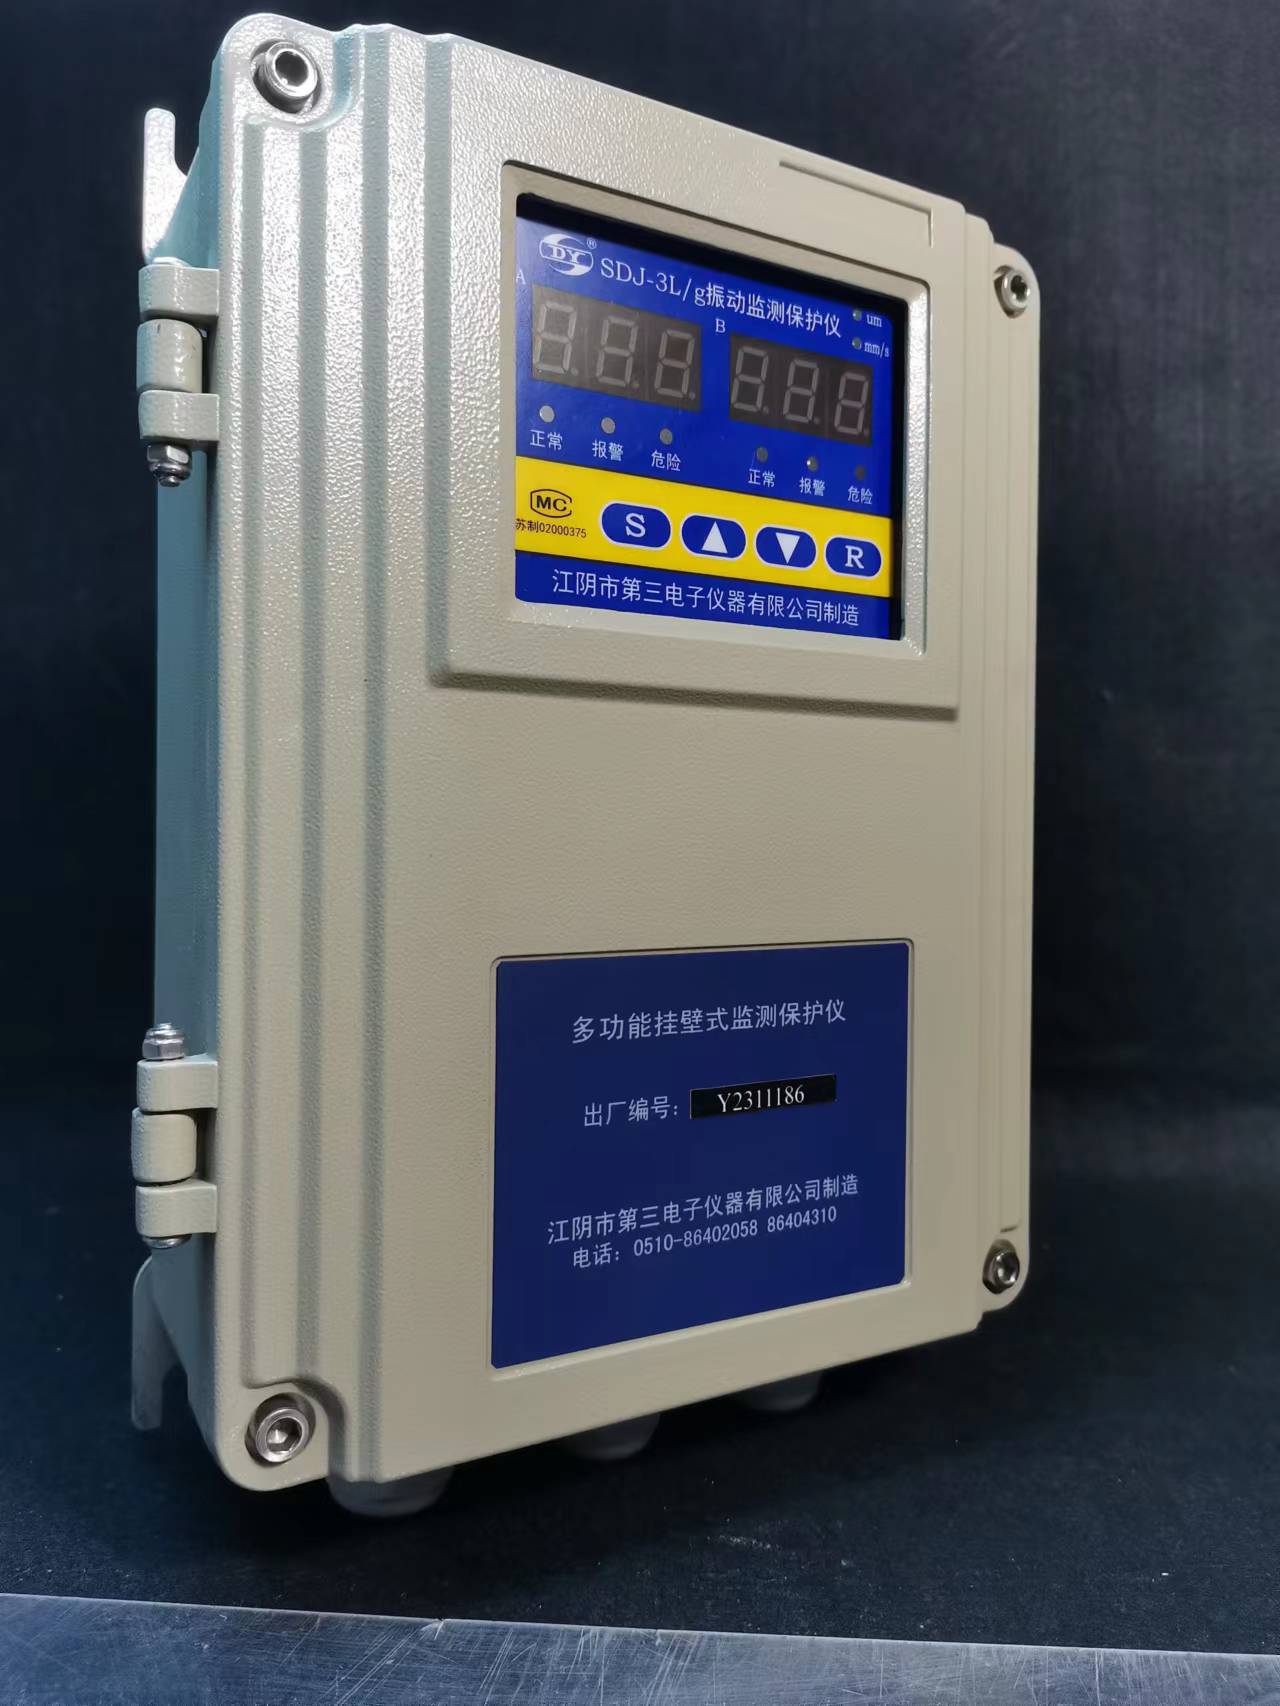 SDJ-3B/g Vibration Monitoring Protection Device  Jiangyin No.3 Electronic Instrument Co.,Ltd